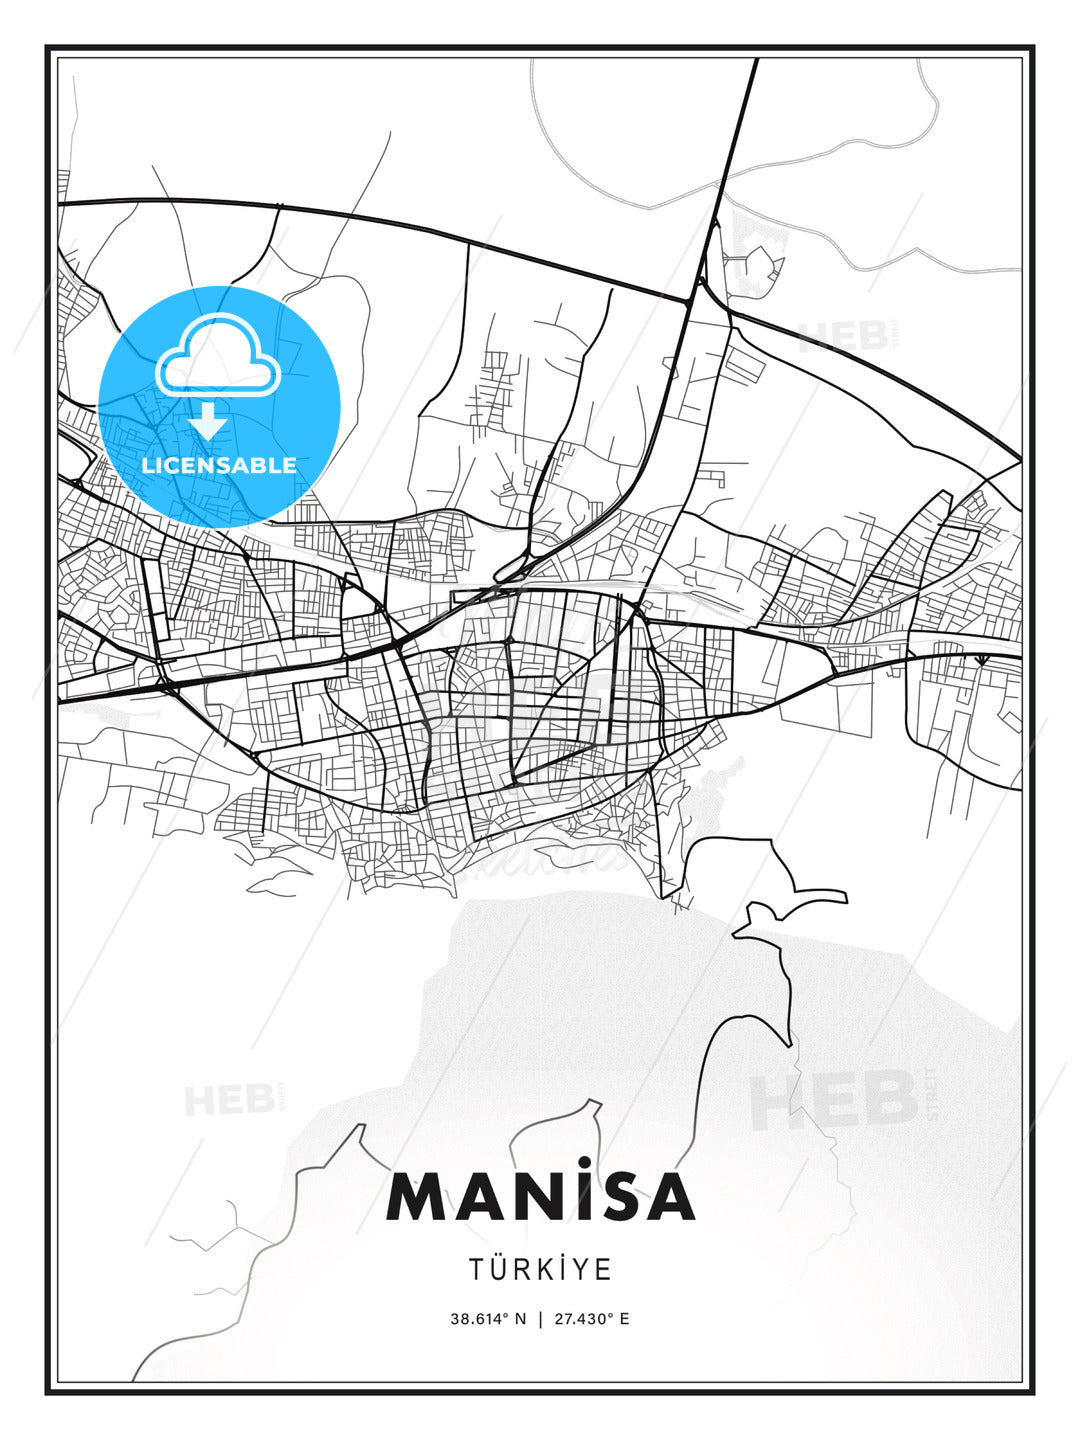 MANİSA / Manisa, Turkey, Modern Print Template in Various Formats - HEBSTREITS Sketches